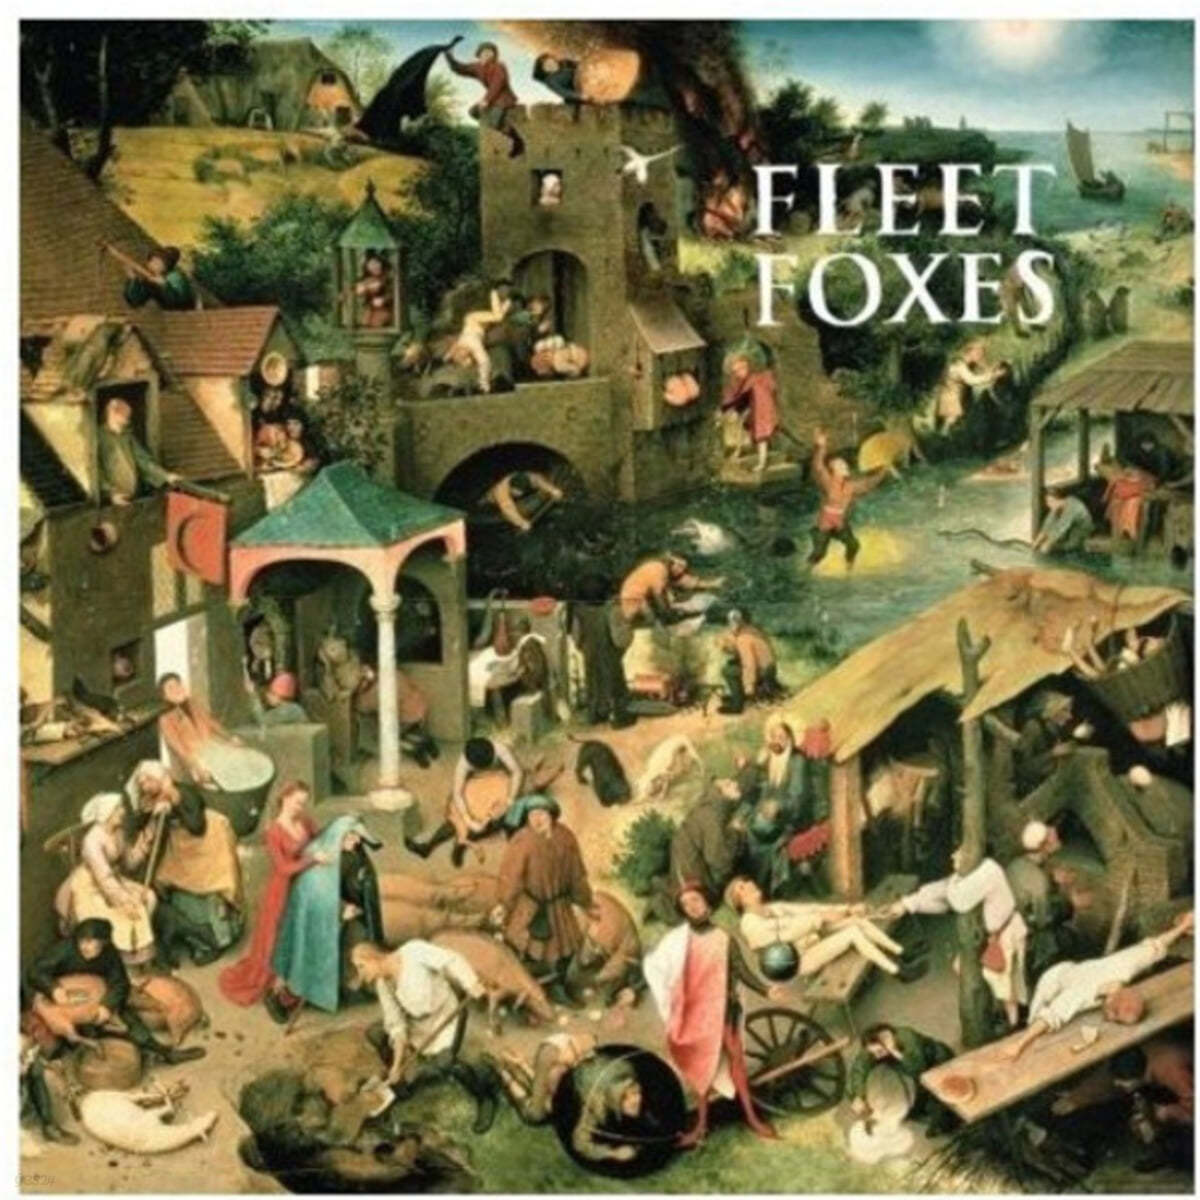 Fleet Foxes (플릿 폭시스) - Fleet Foxes [2LP]